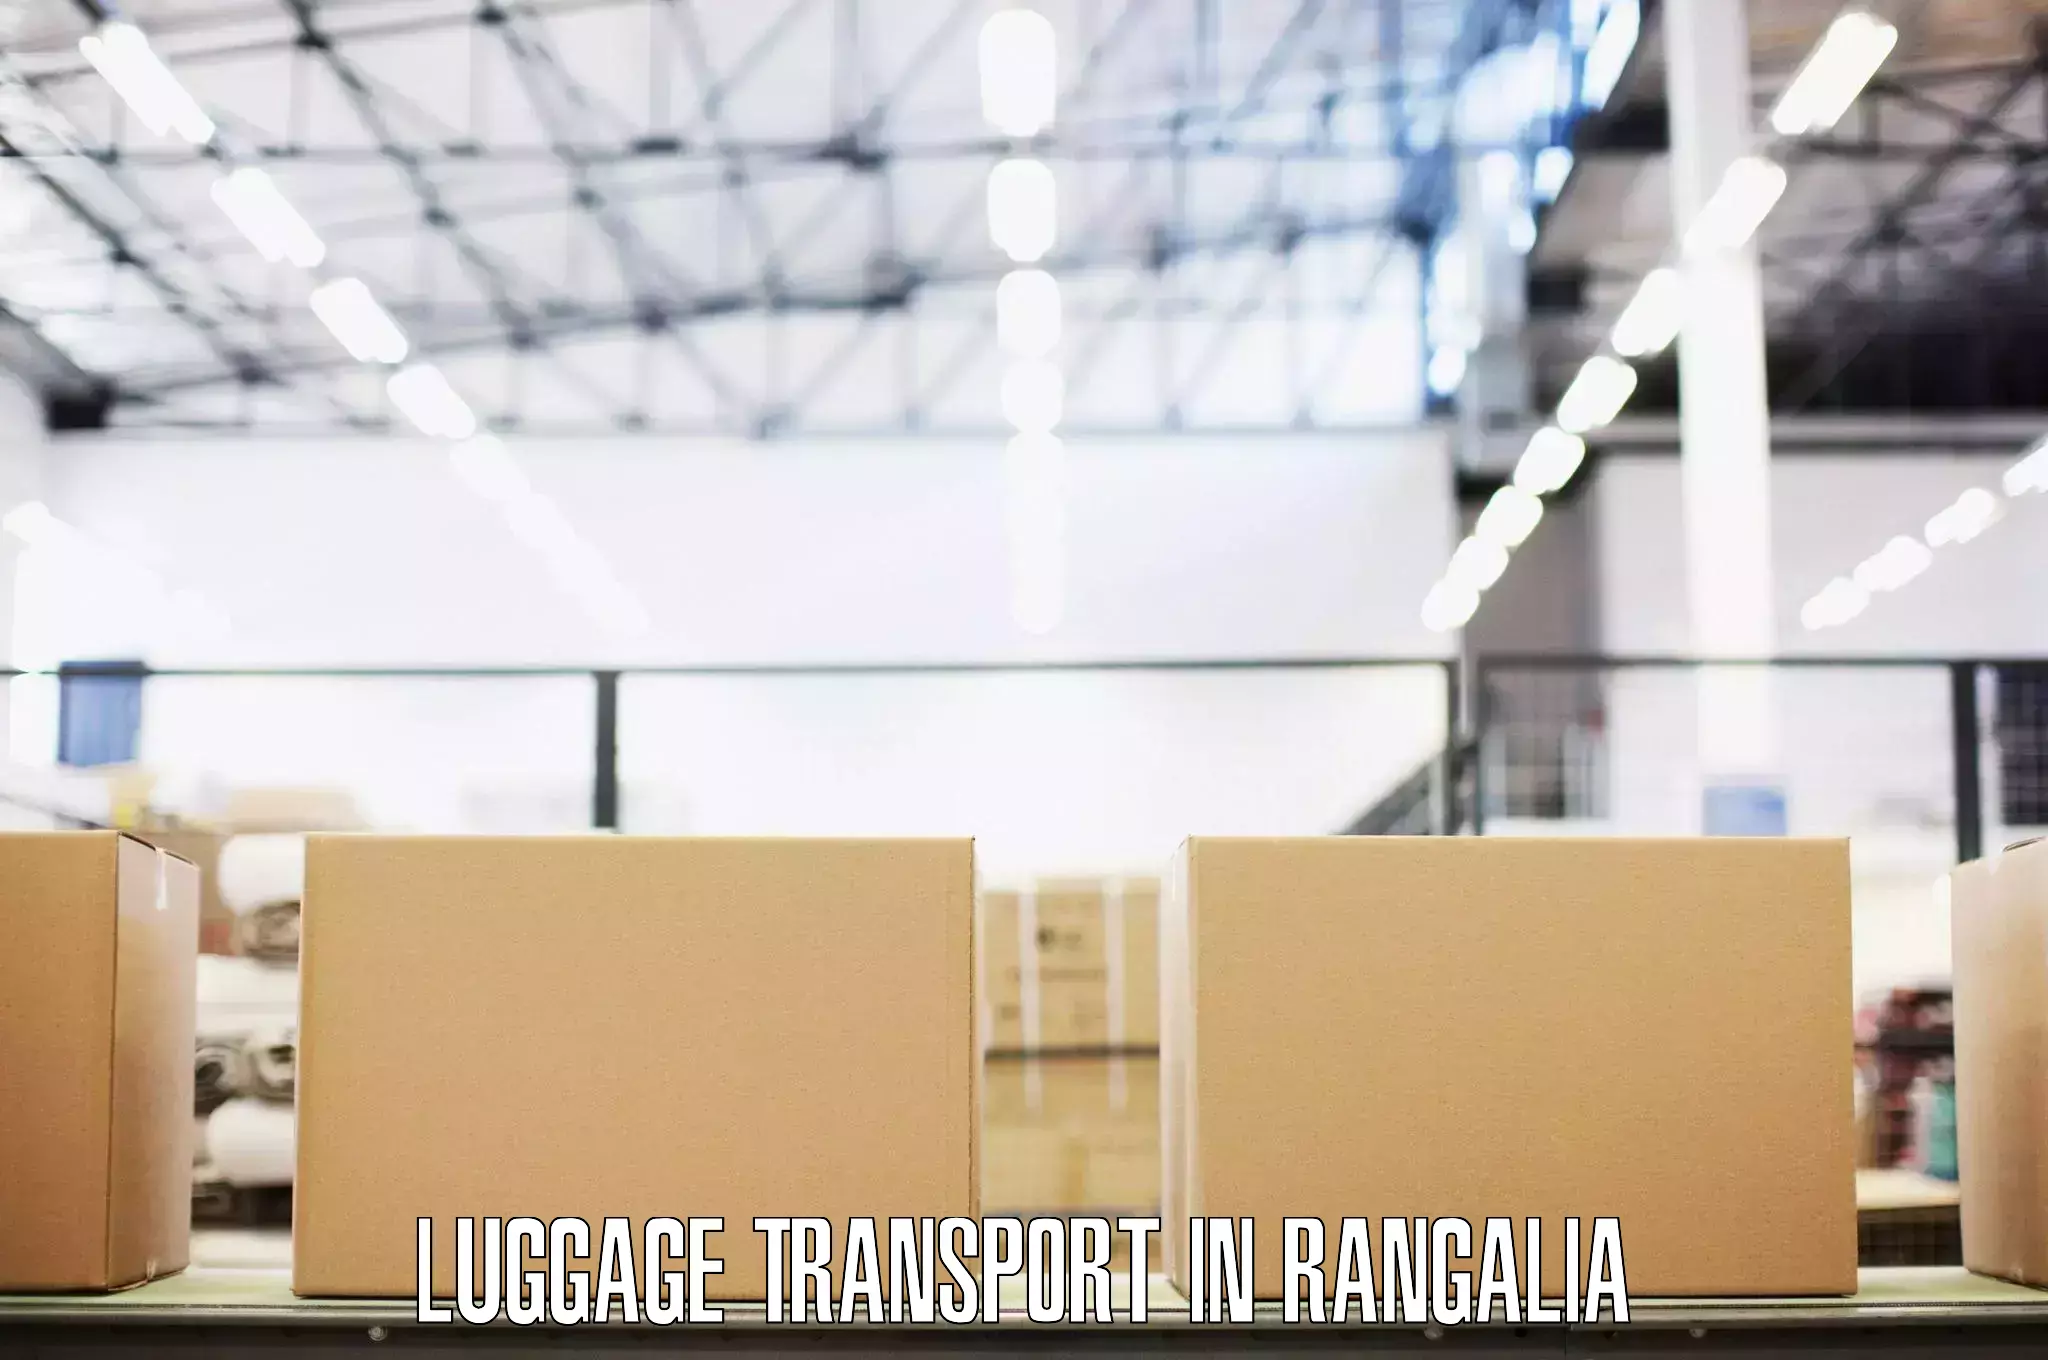 Holiday season luggage delivery in Rangalia